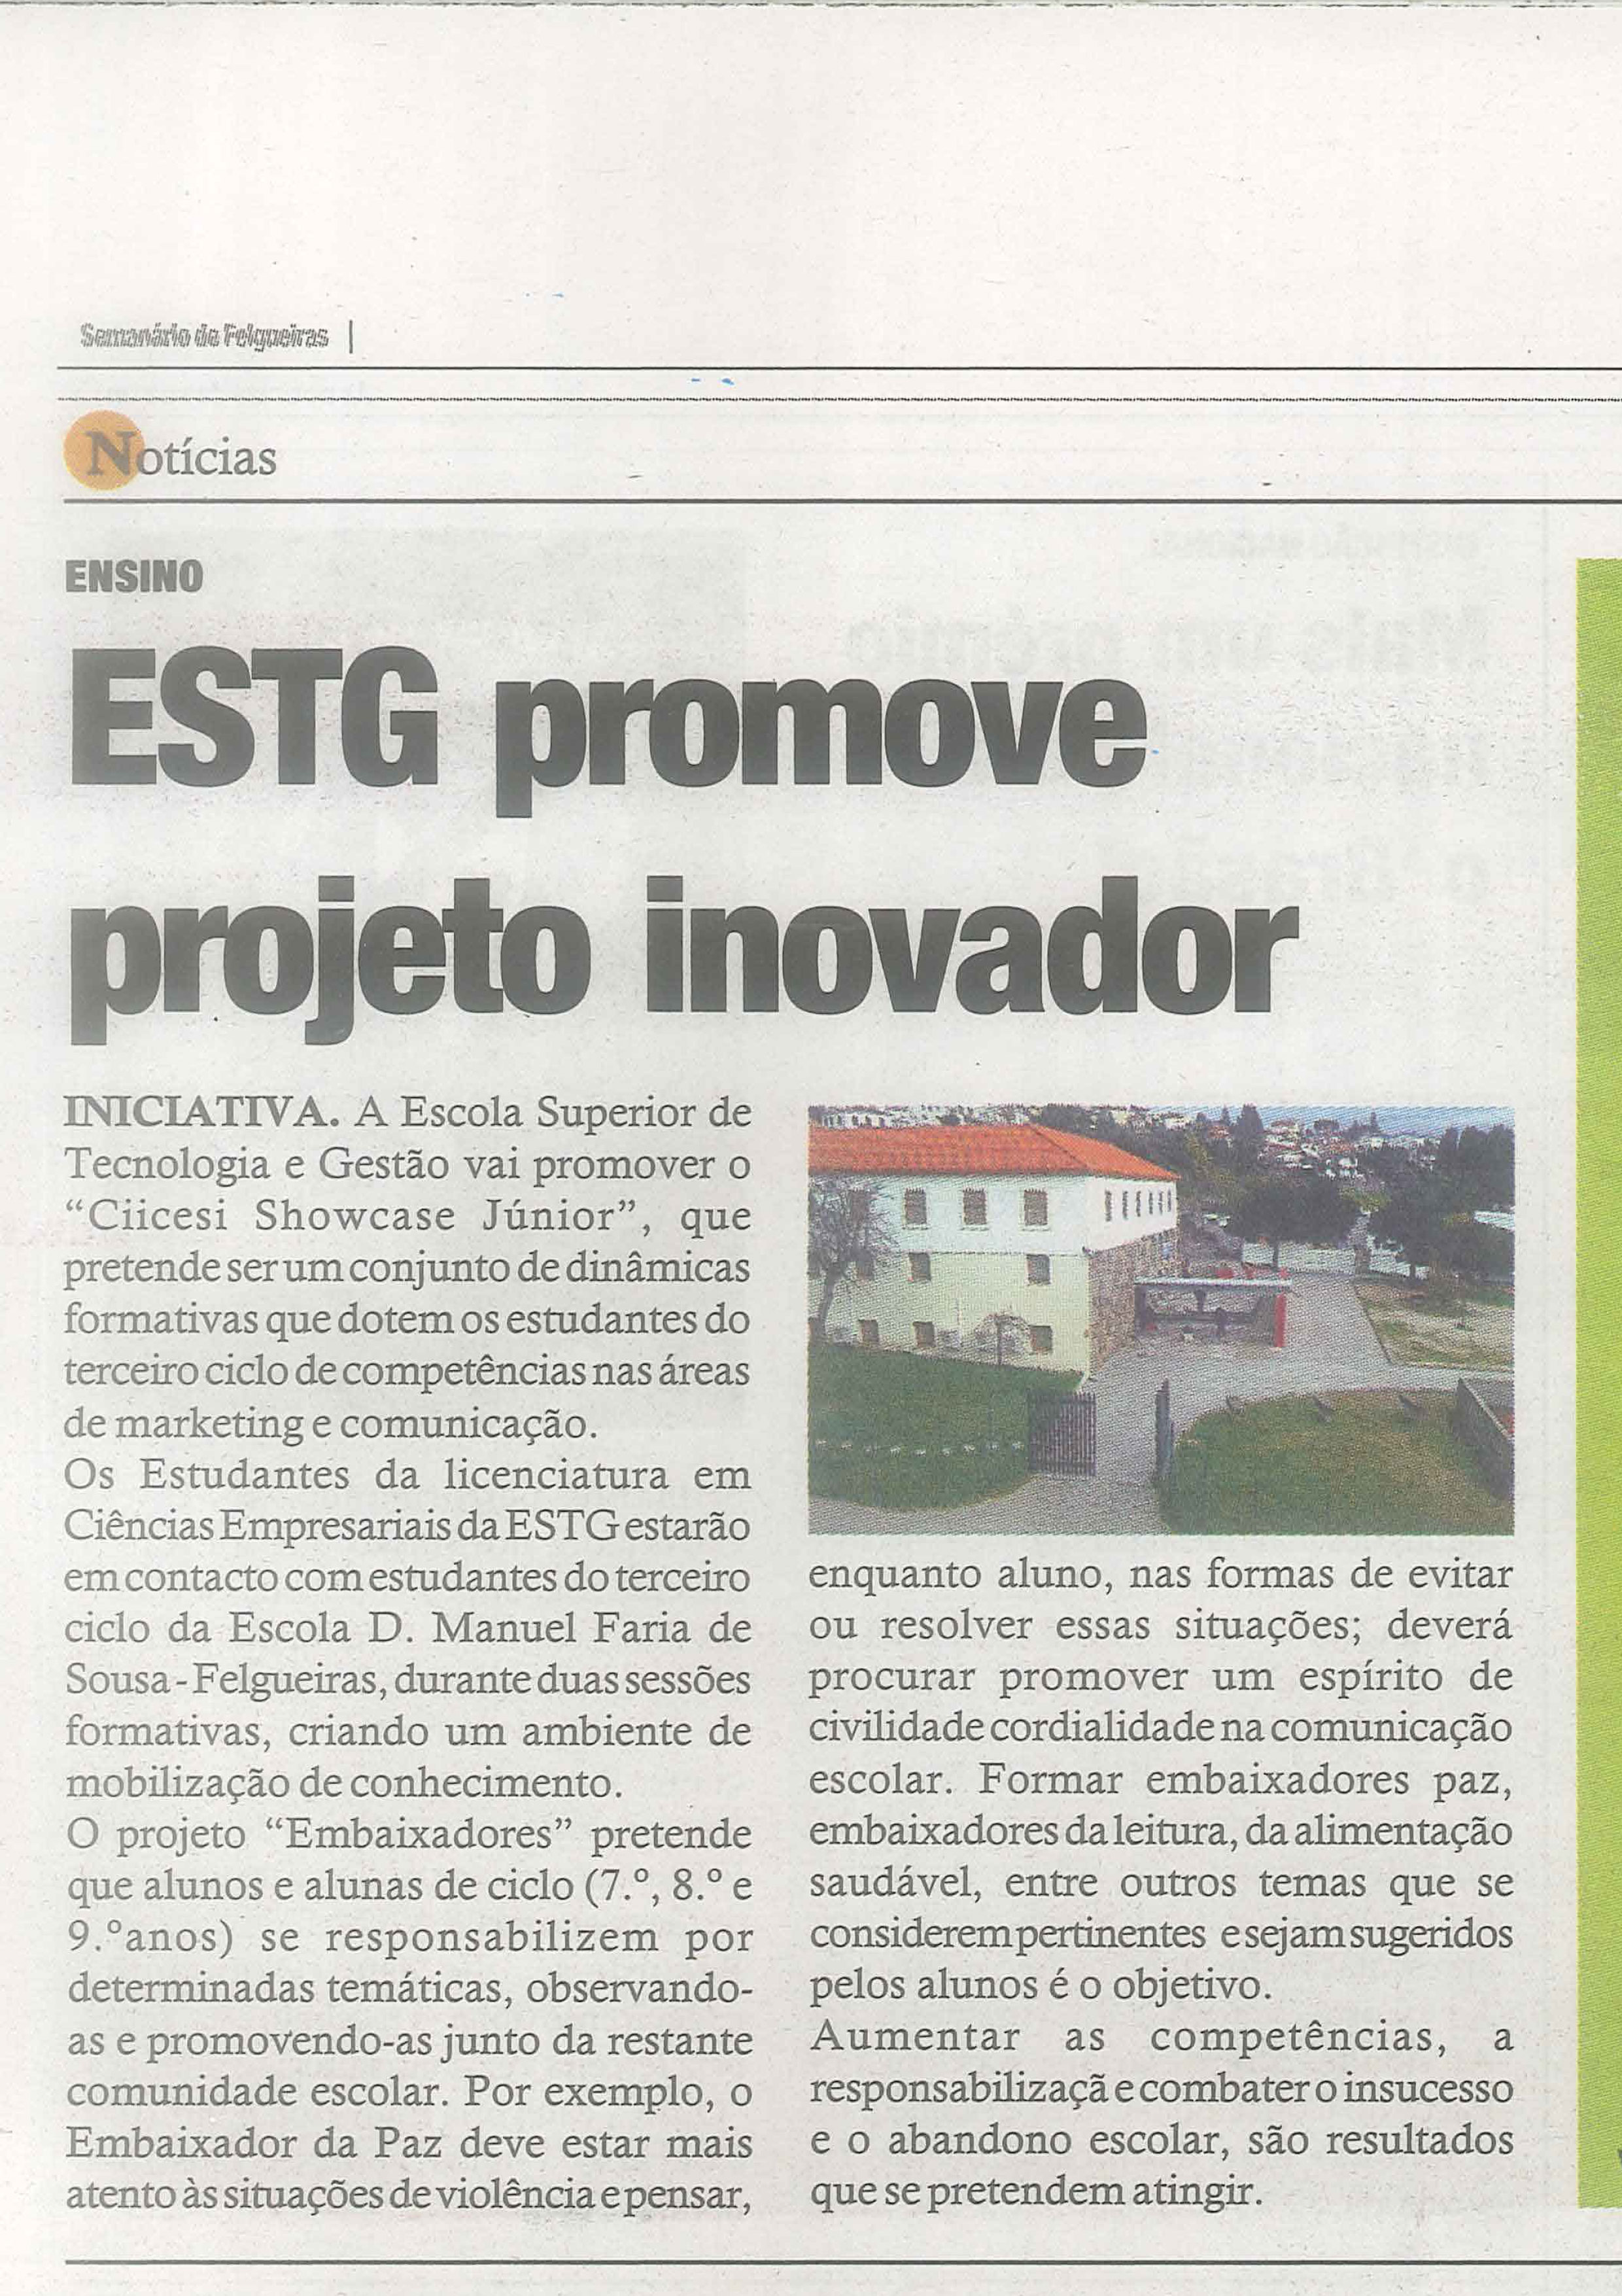 ESTG promove projeto inovador